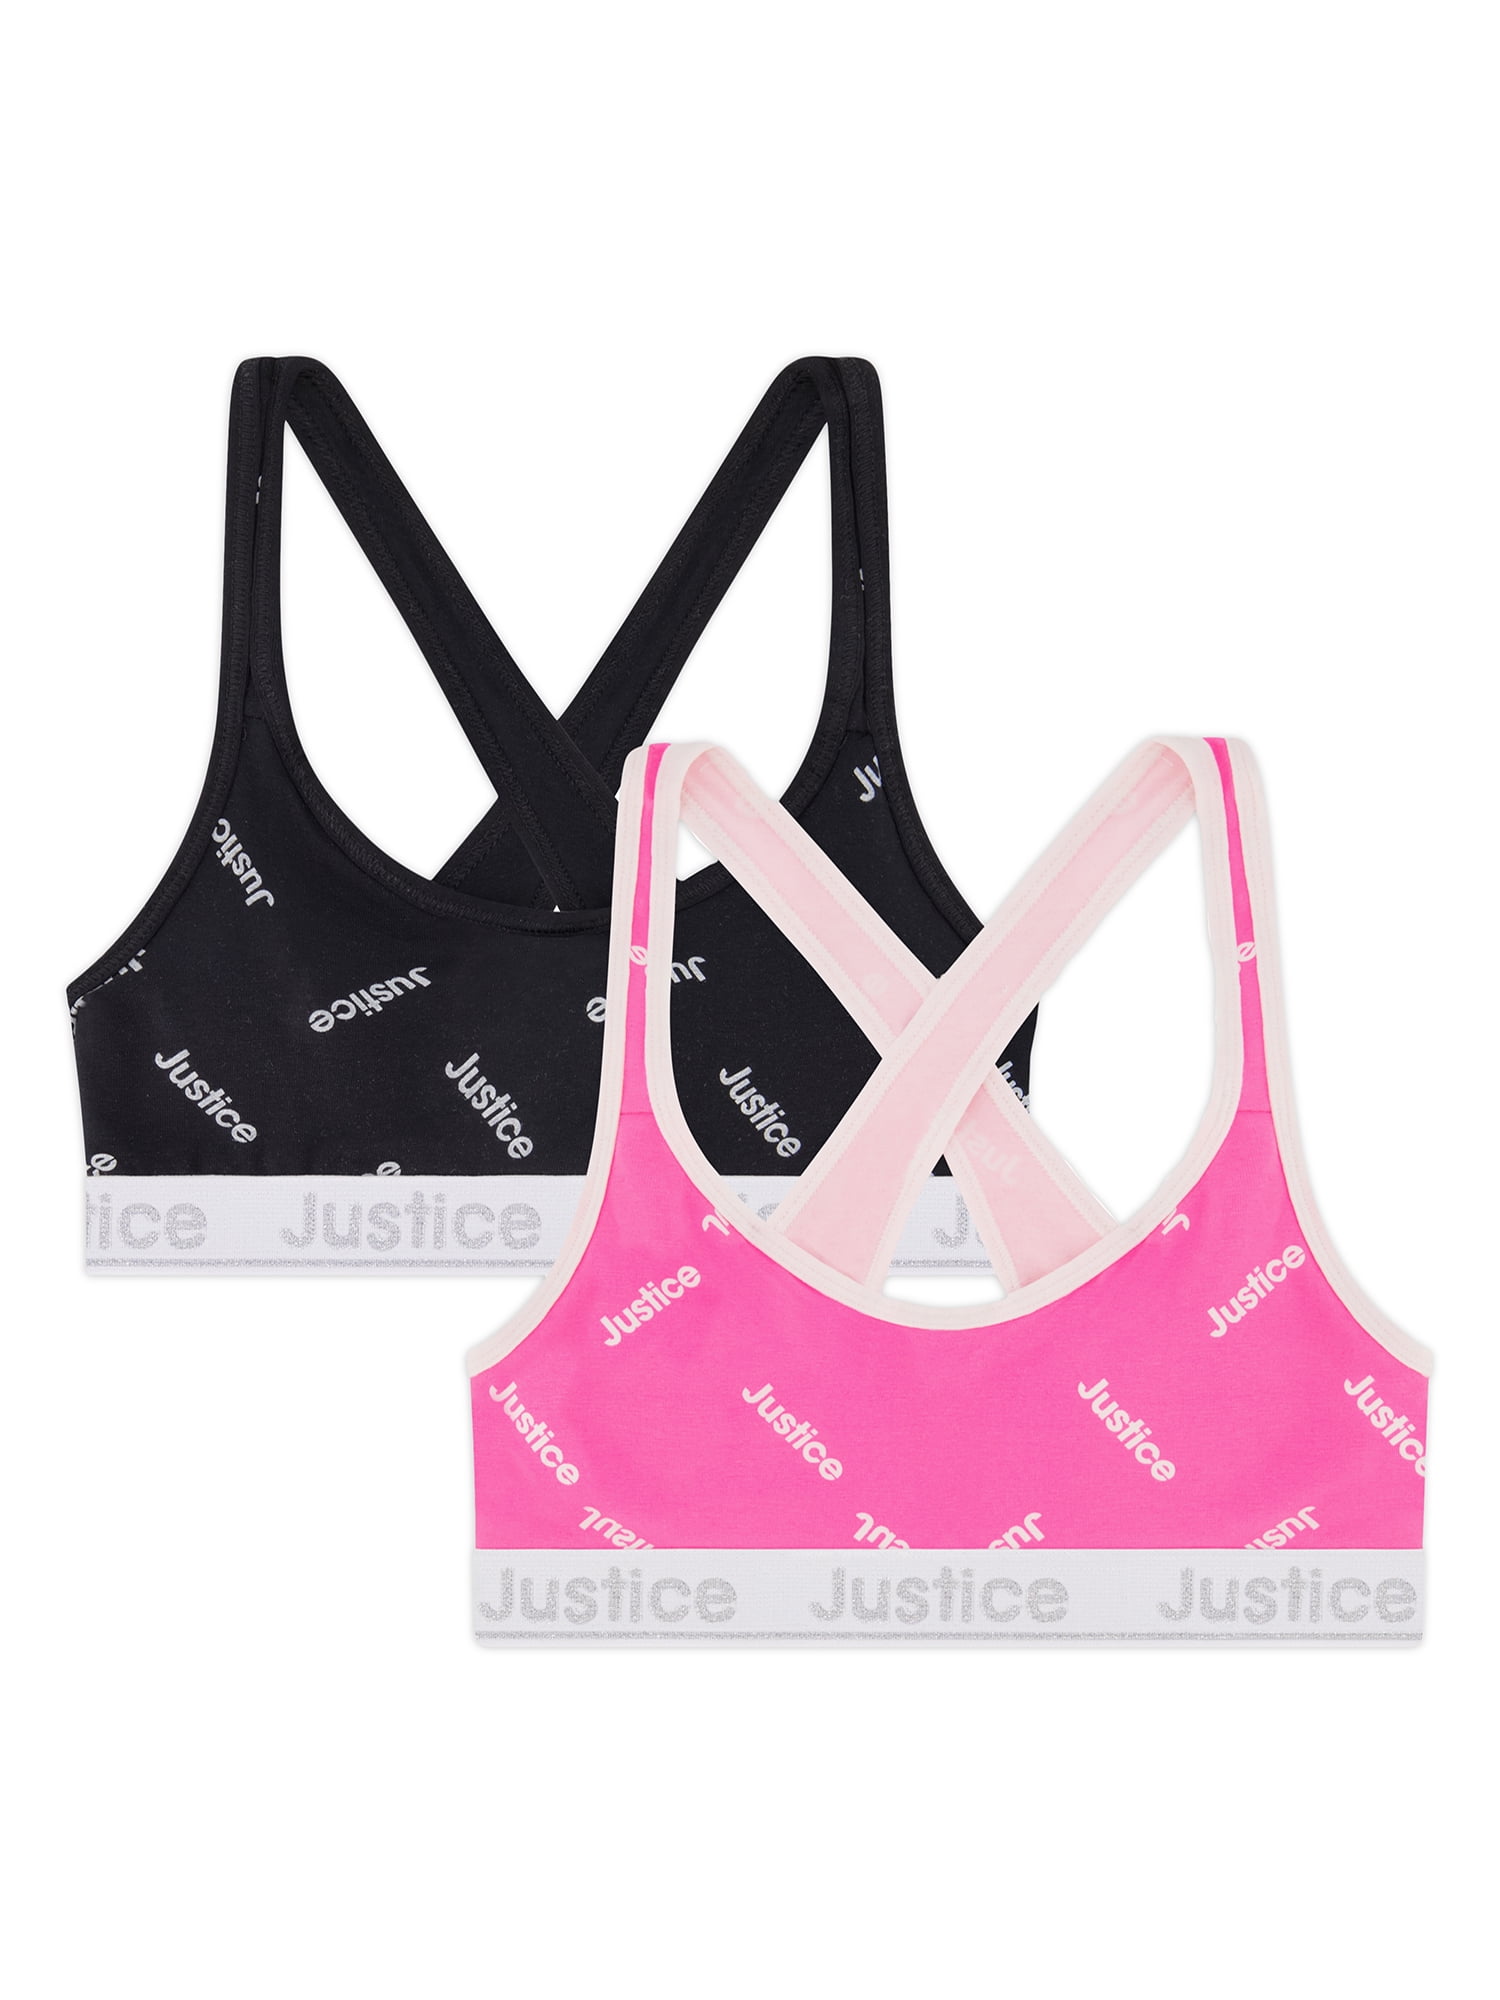 Justice Girls Oh So Soft Pull-on 2 Pack Criss Cross back Sportsbra 